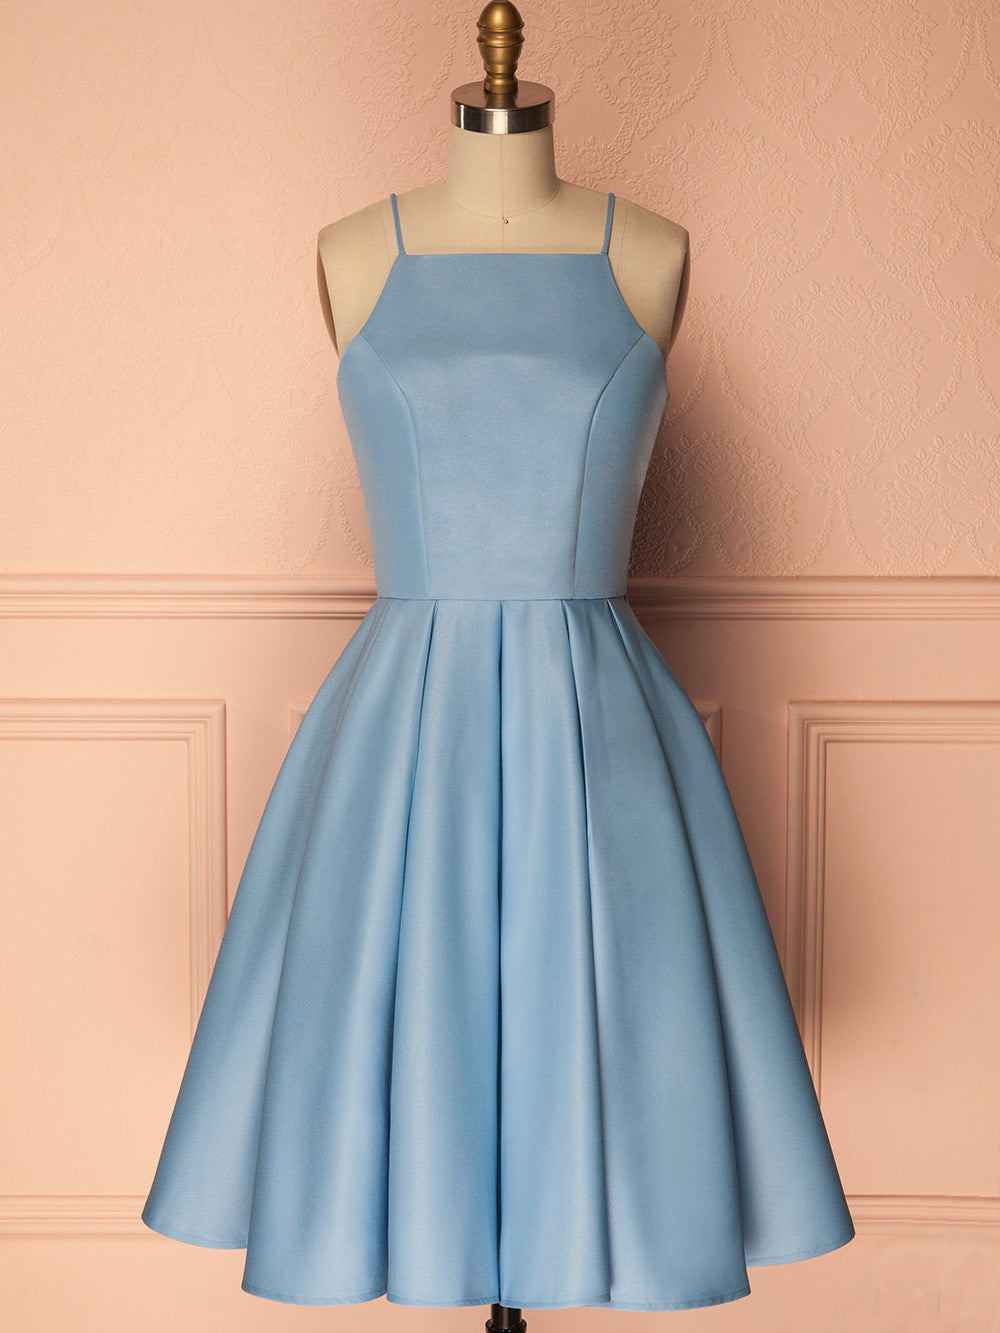 2017 Homecoming Dress Blue Halter Sleeveless Short Prom Dress Party Dress JK120